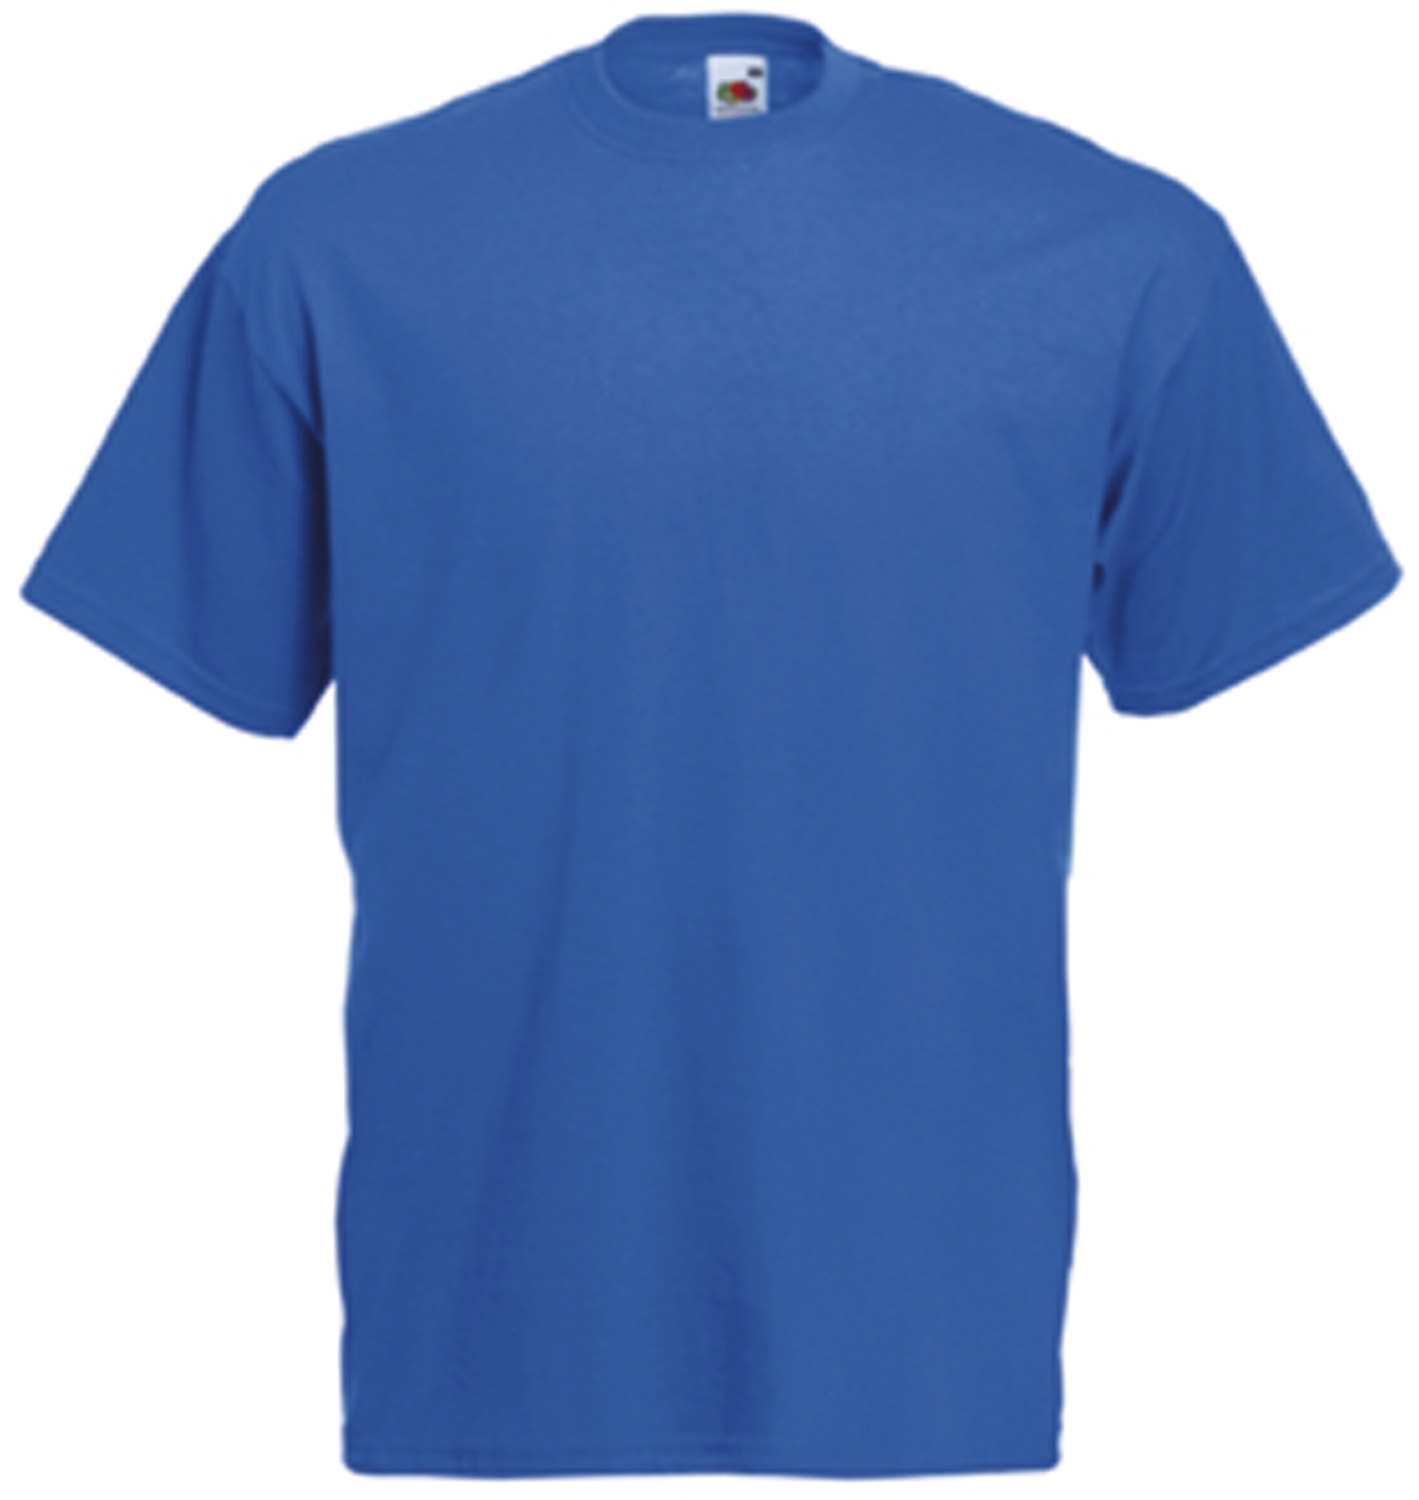  Tee-shirt Value-Weight Bleu royal 